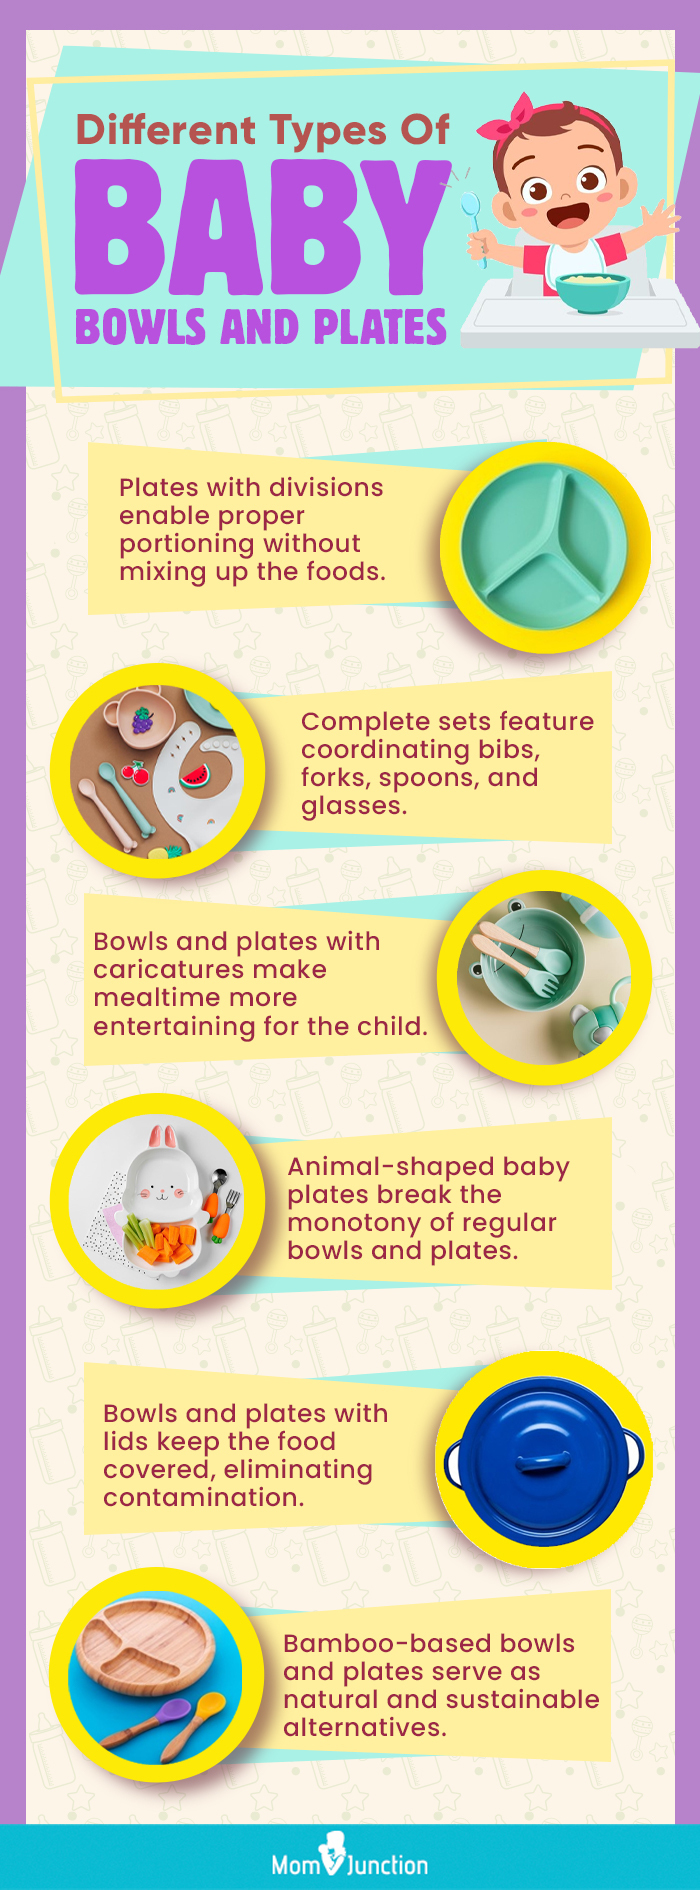 BrushinBella Baby Feeding Set - Collapsible Feeding Supplies for